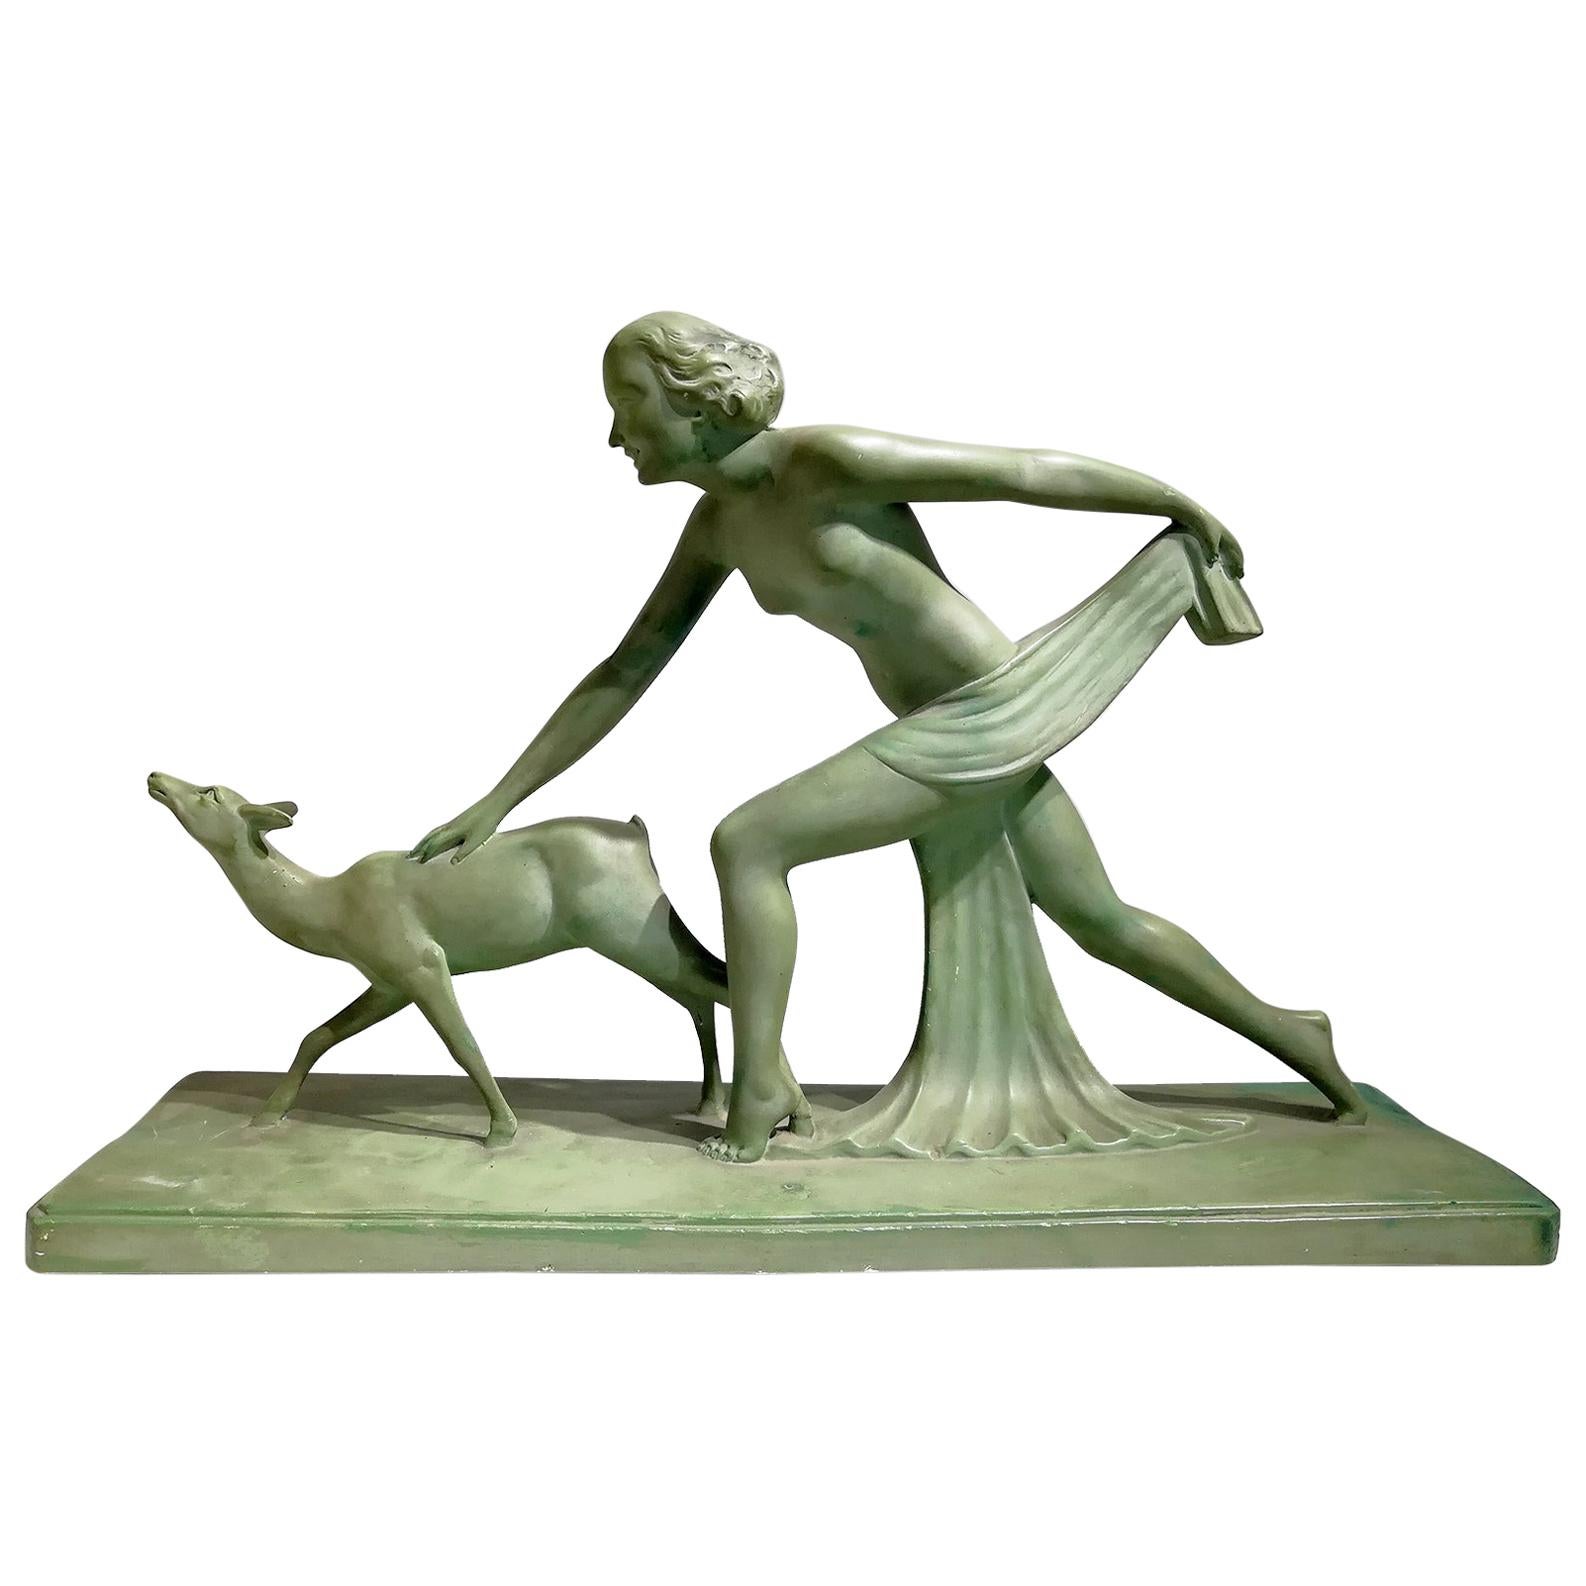 Beautiful Green Terracotta Sculpture Signed “S.Melanie”, circa 1920 For Sale